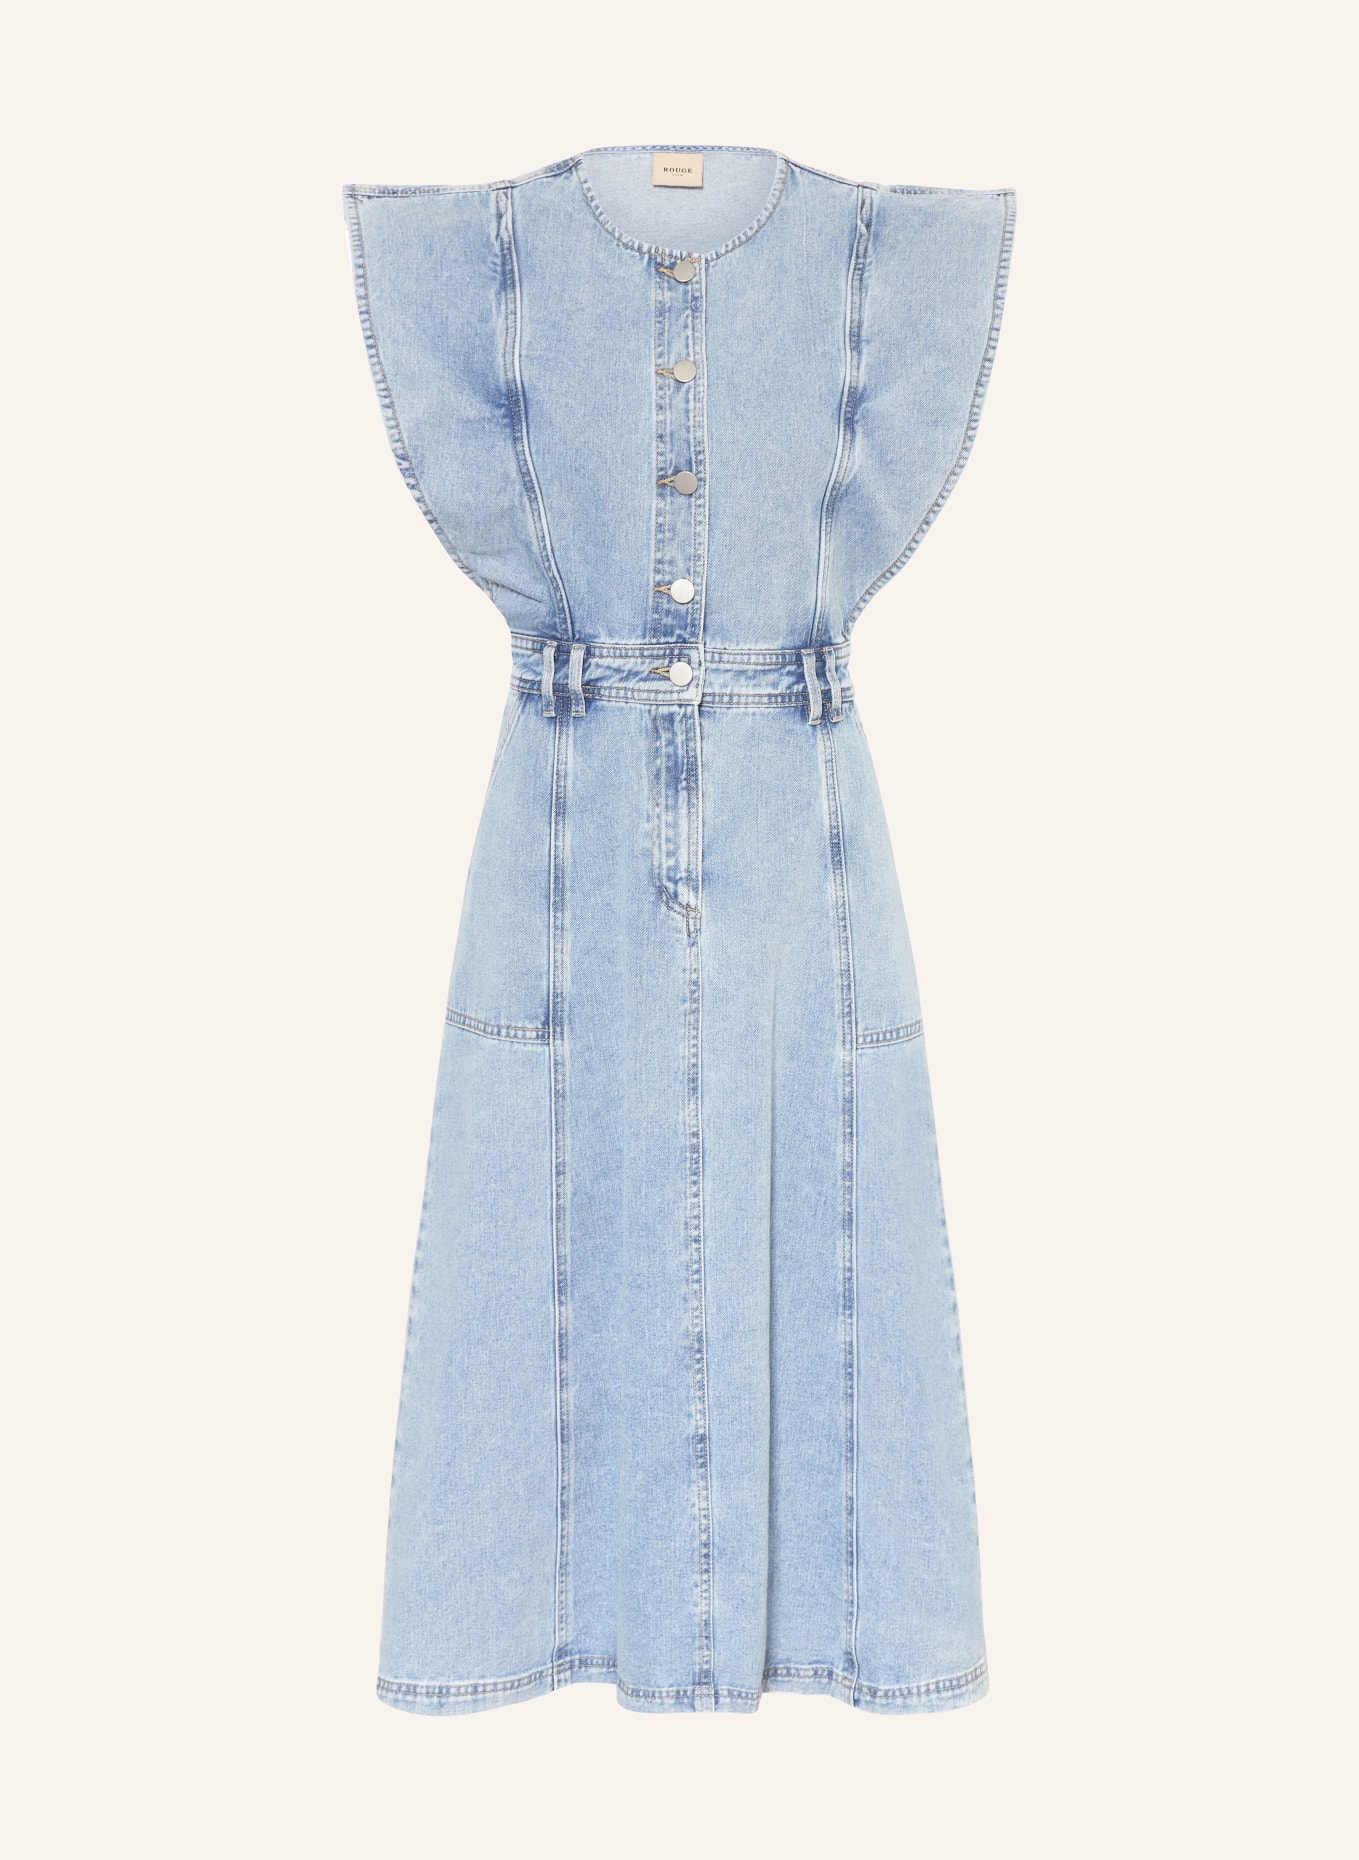 ROUGE VILA Jeanskleid mit Volants, Farbe: LIGHT BLUE DENIM (Bild 1)